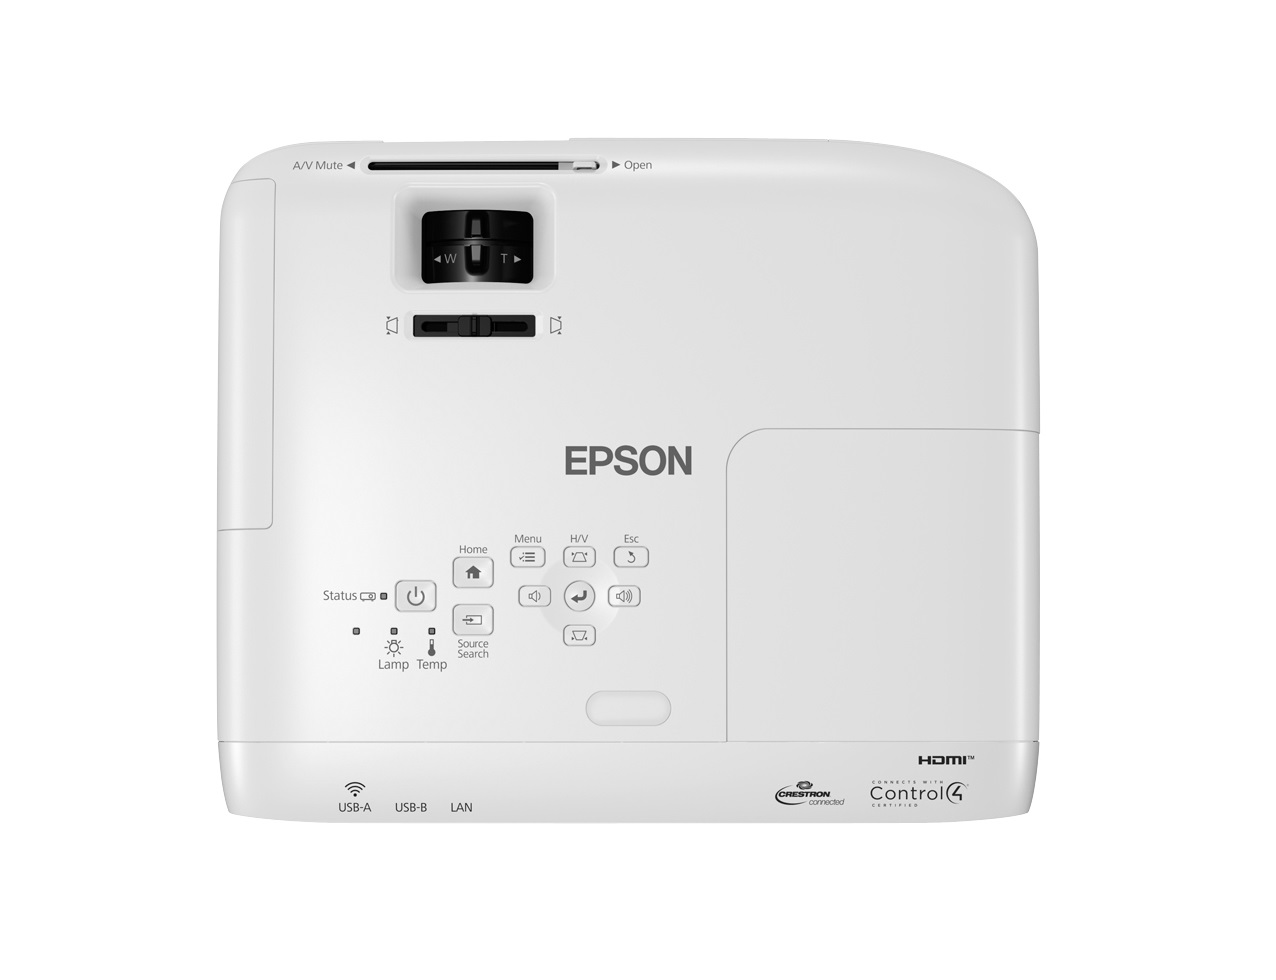 epson-eb-w49-wxga-projector-control4-compatible